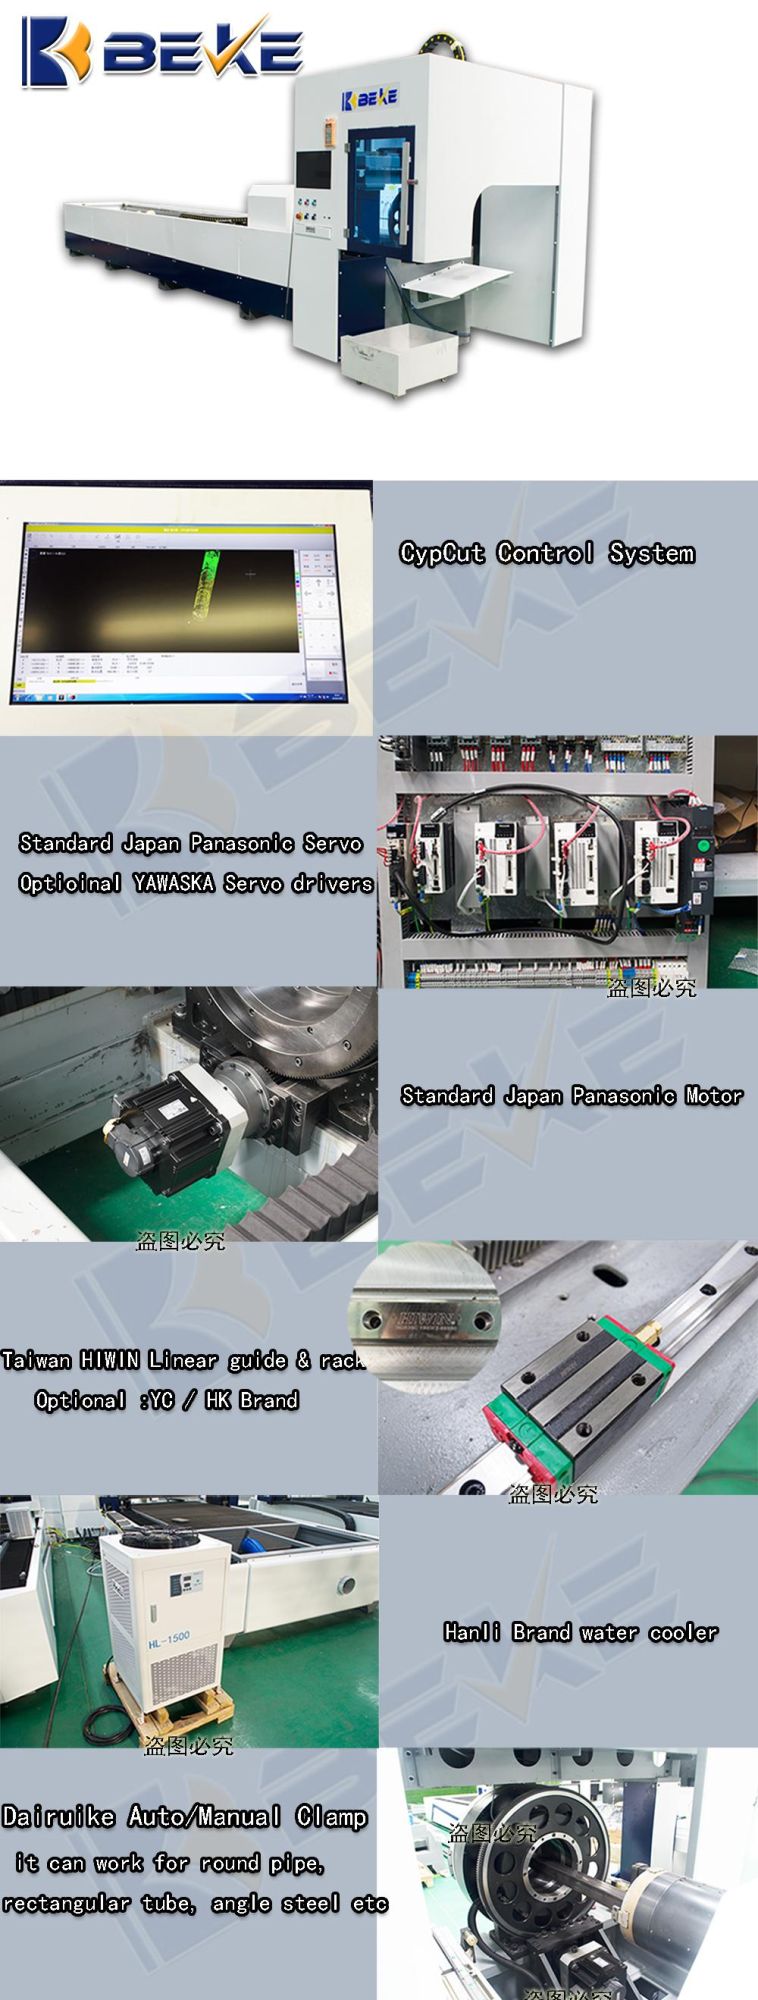 Bk 6012 Aluminum Sheet Tube CNC Fiber Laser Cutting Machine Sale Online